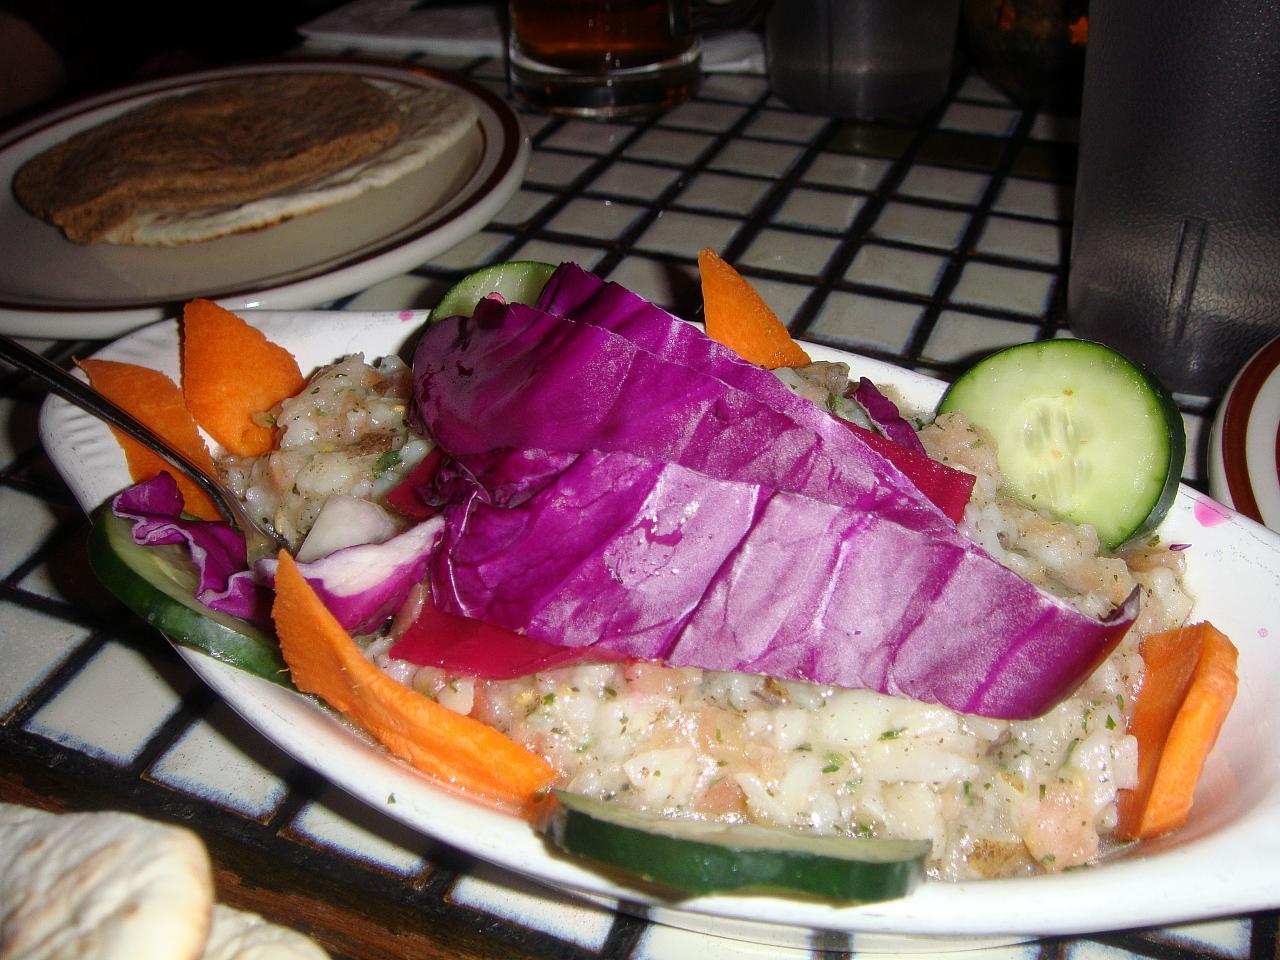 Armenian Potato Salad